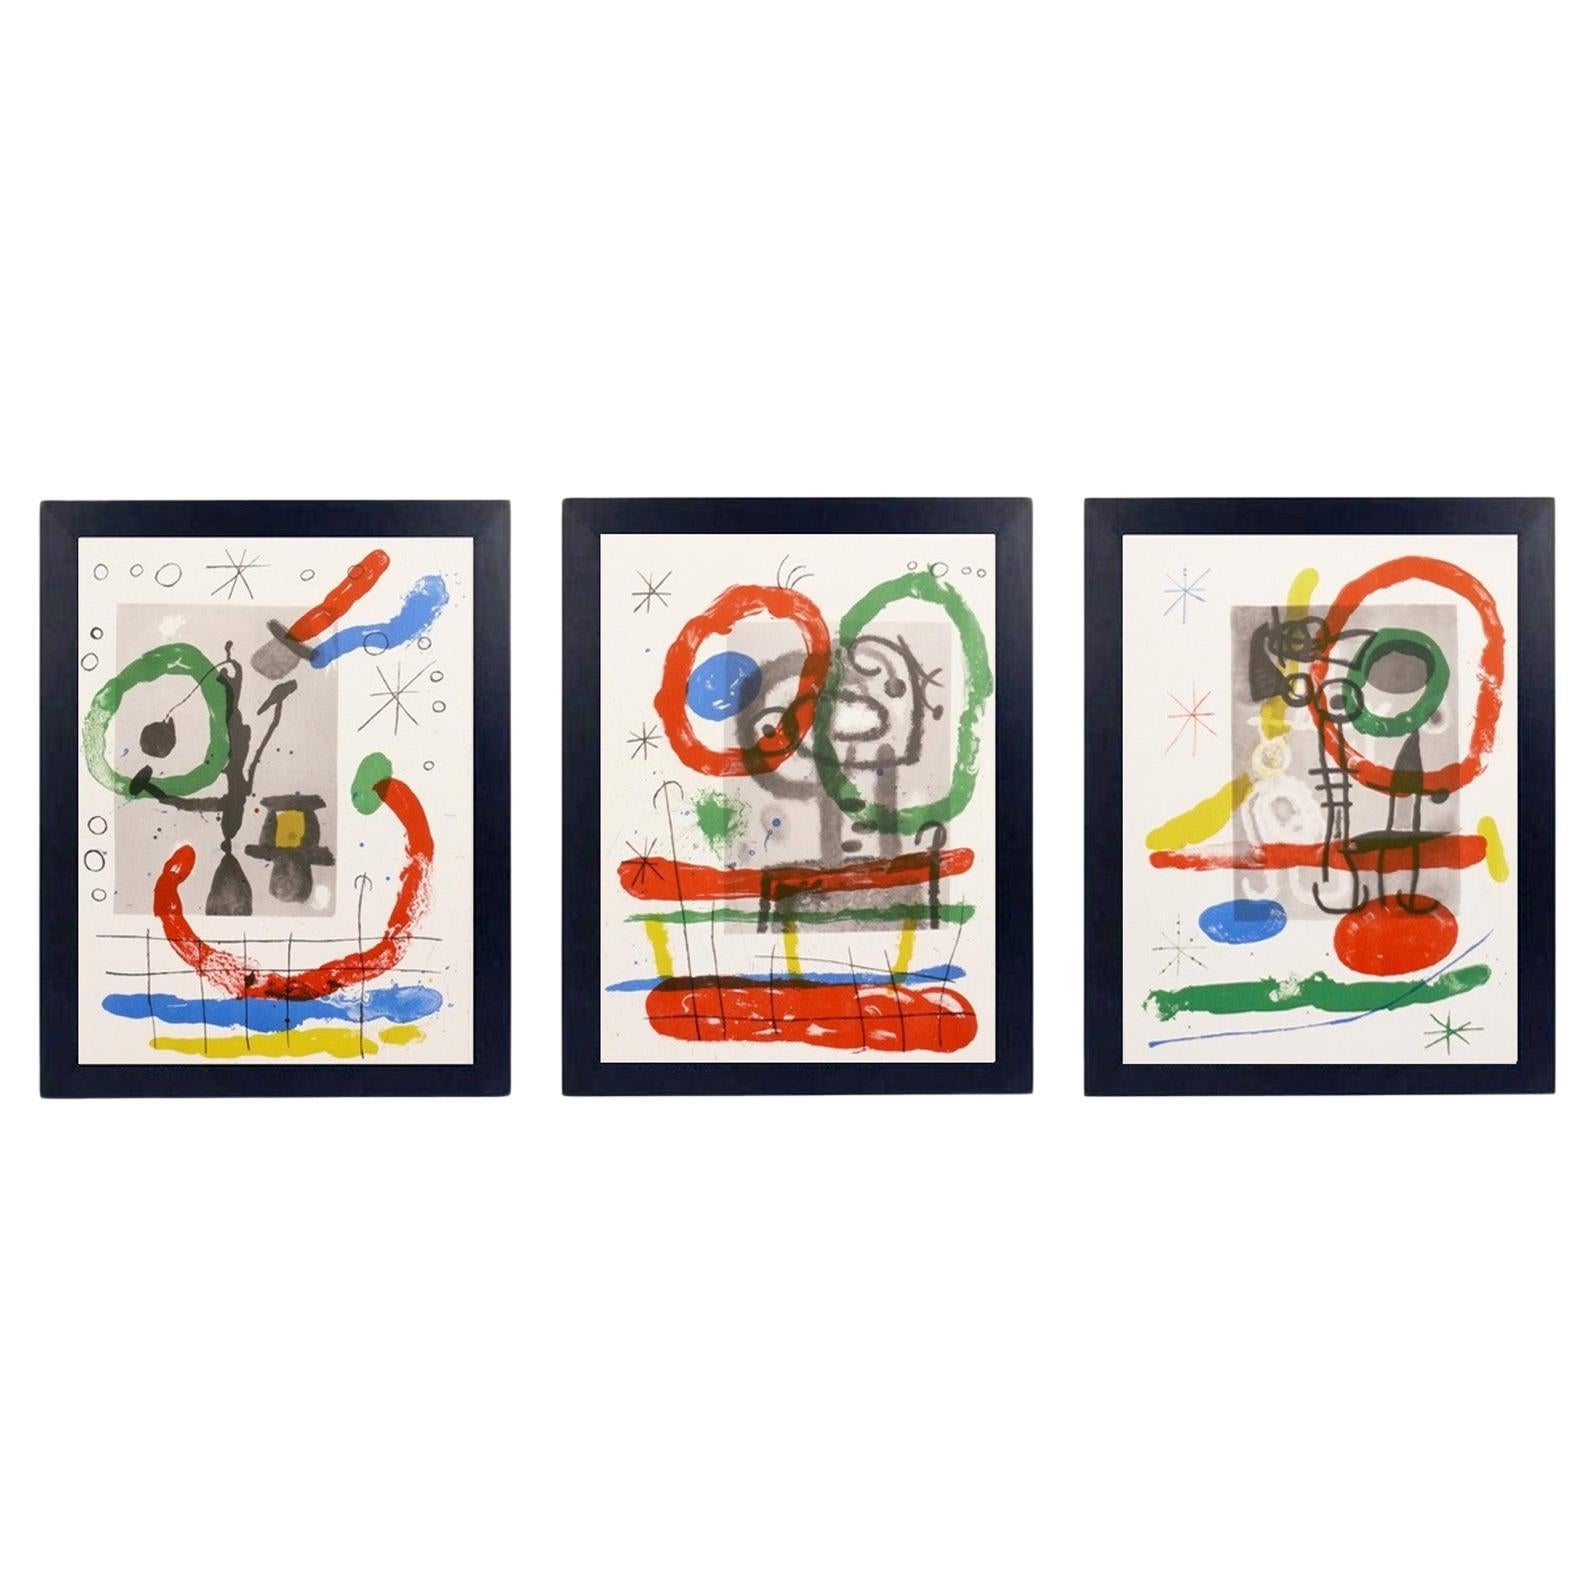 Selection of Joan Miro Lithographs 